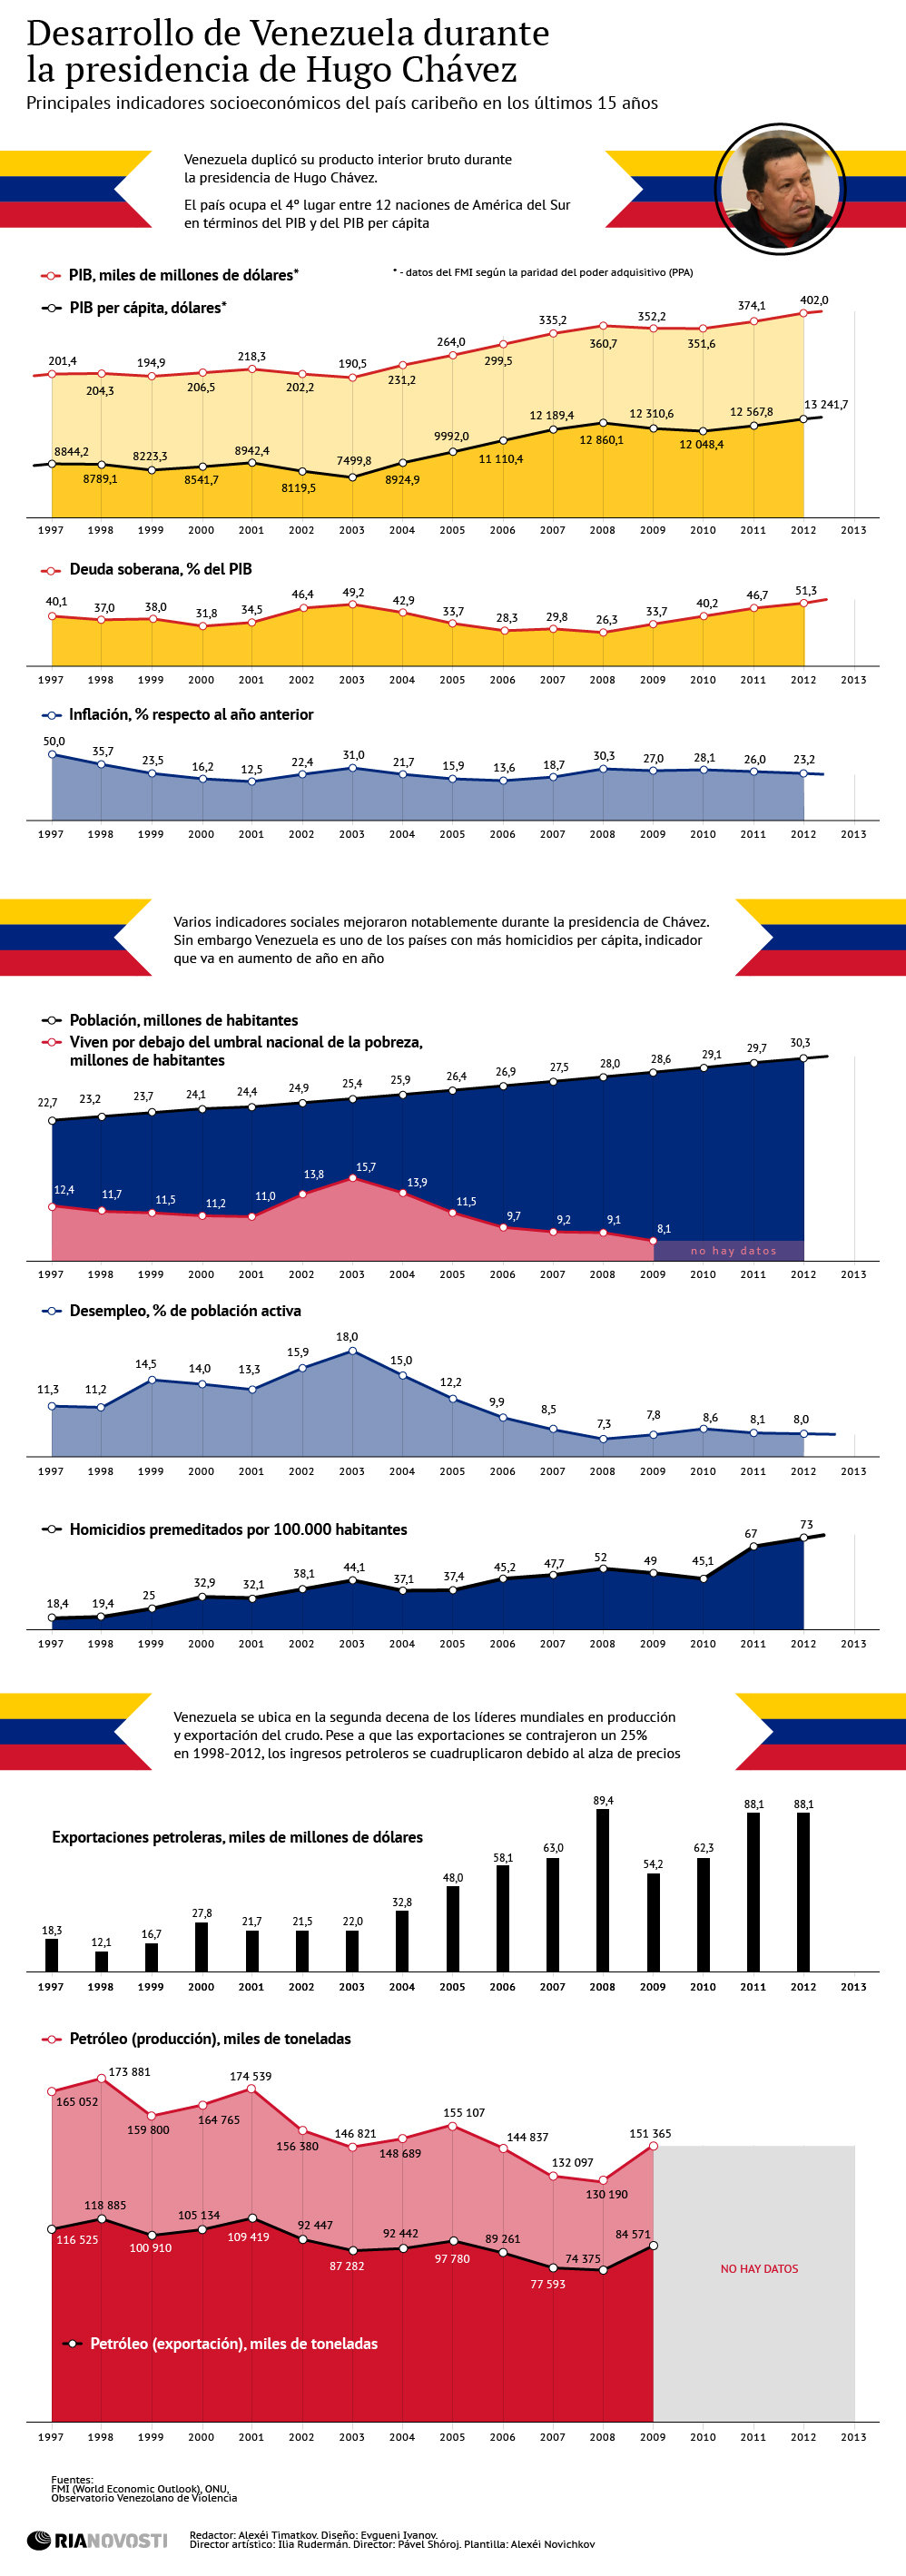 Desarrollo de Venezuela durante la presidencia de Hugo Chávez - Sputnik Mundo